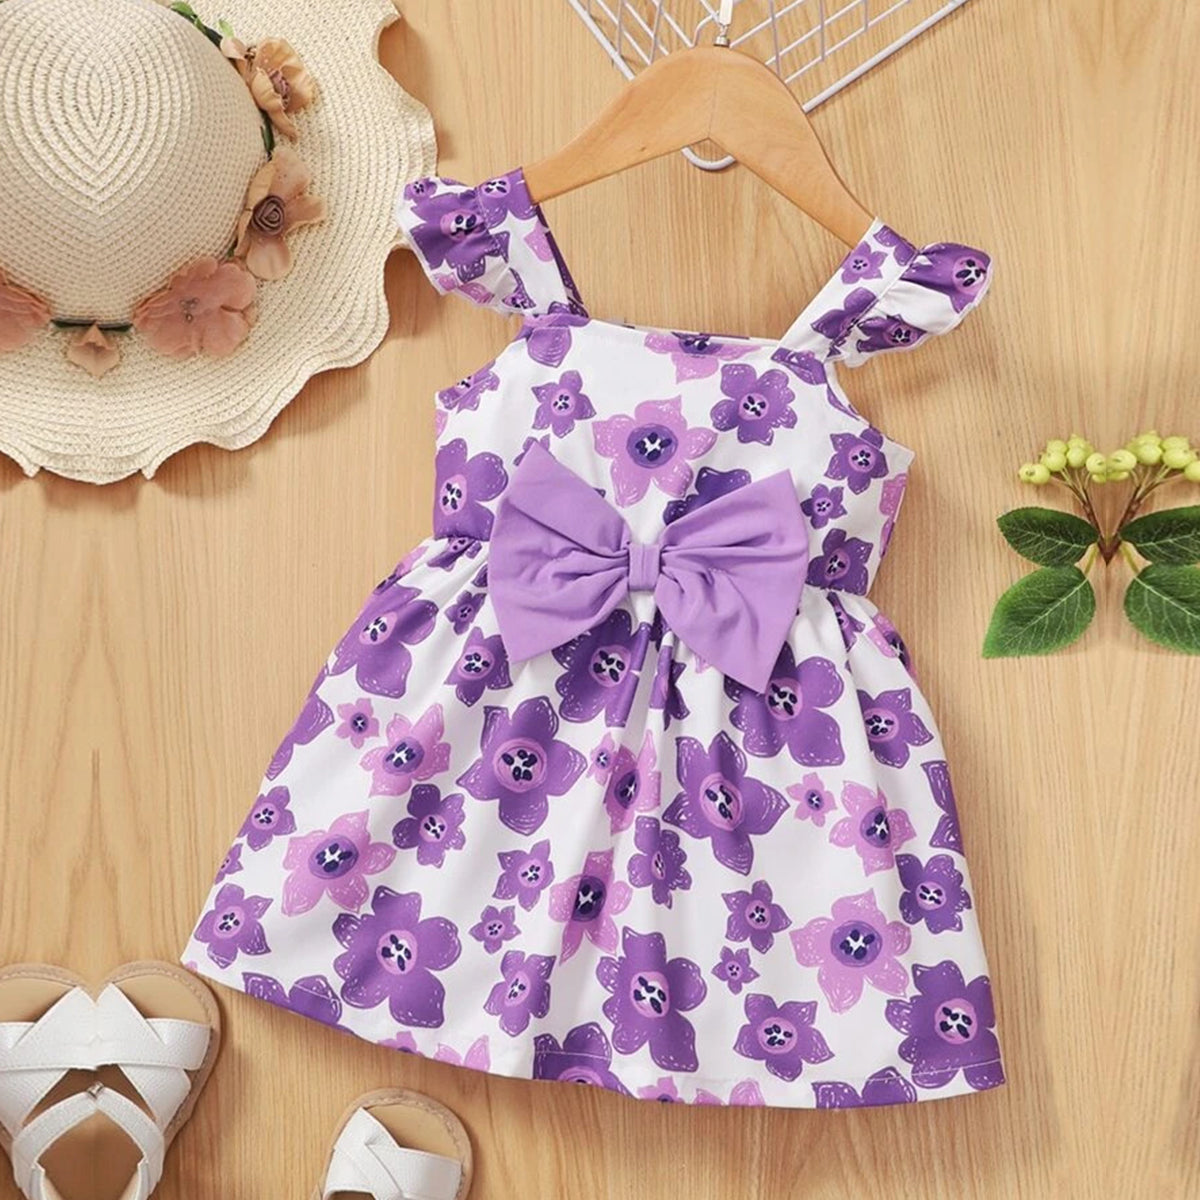 Stylish stylish designer baby girl dress designs for summer - YouTube